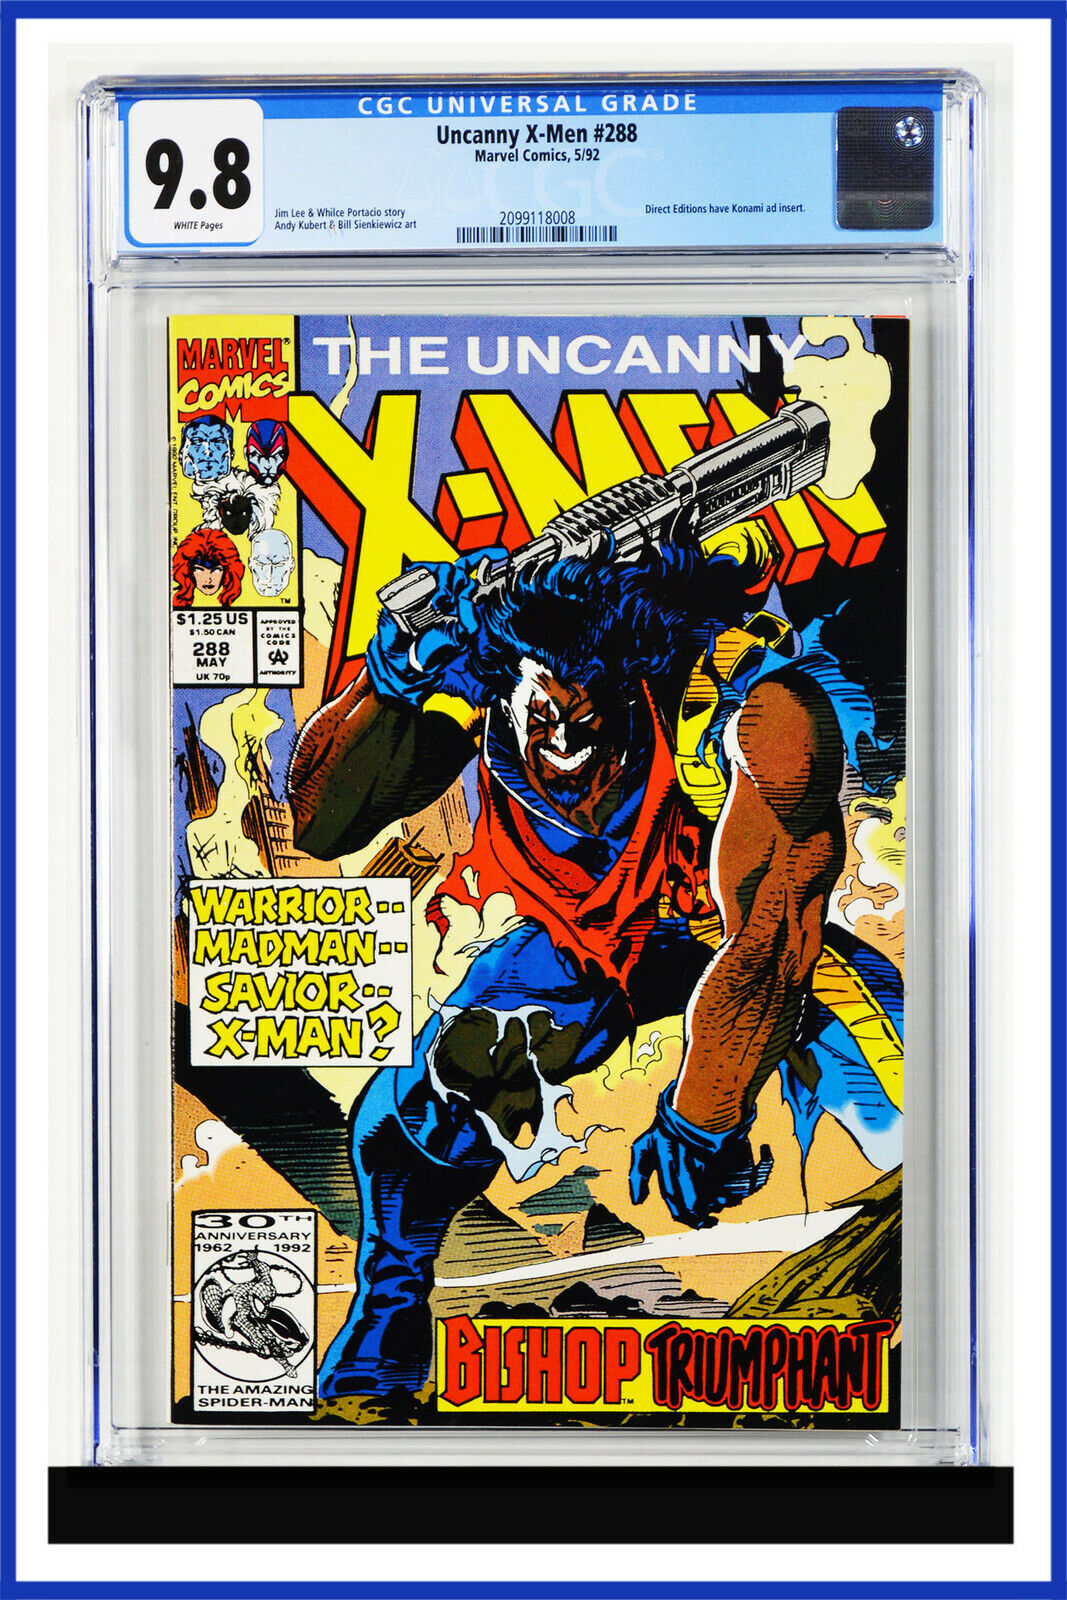 Uncanny X-Men #288 CGC Graded 9.8 Marvel May 1992 Andy Kubert Cover Comic Book.